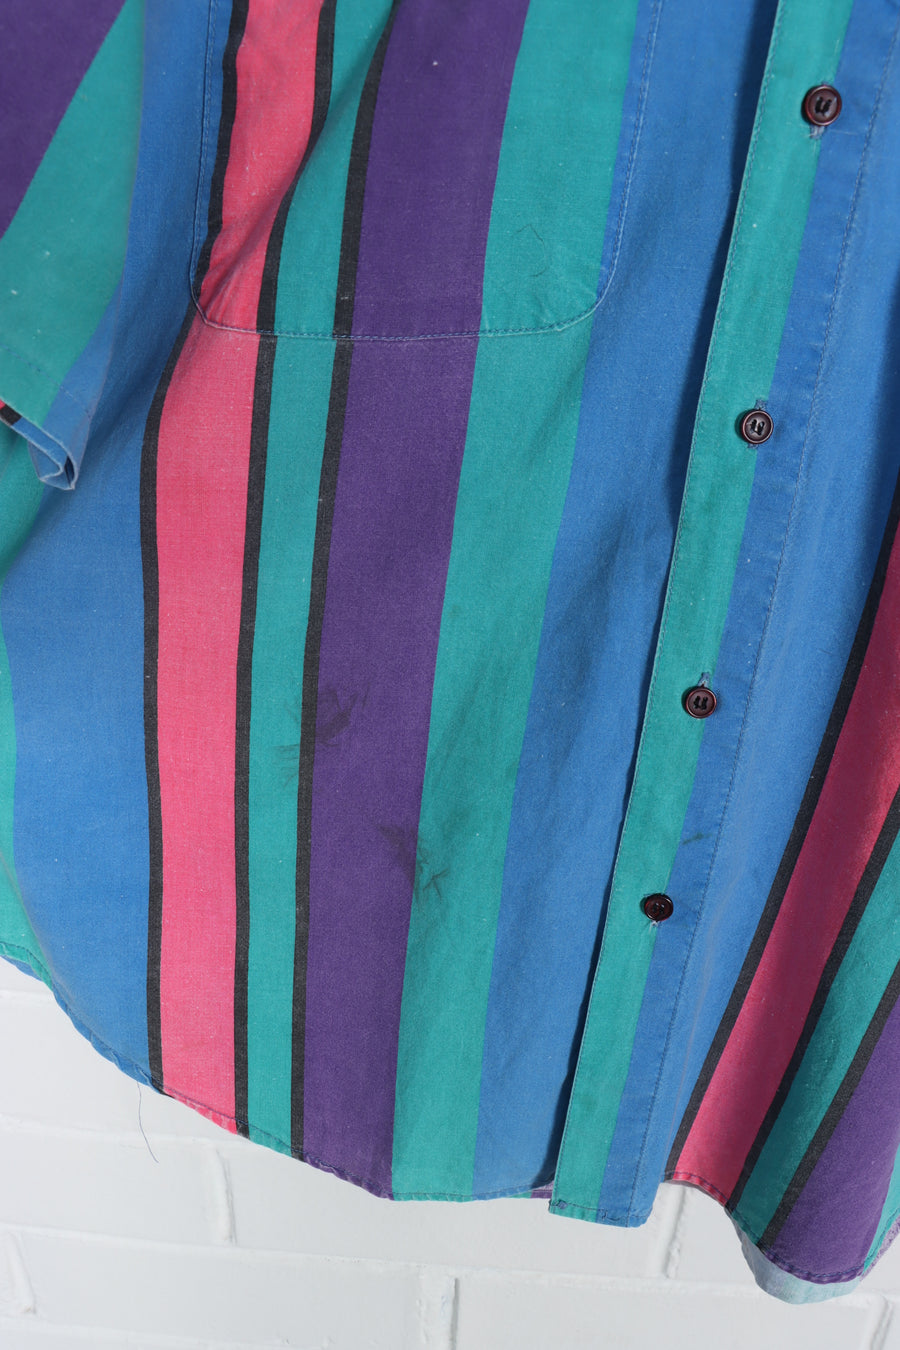 Bright Colourful Stripe Short Sleeve Button Up Shirt (XL-XXL)